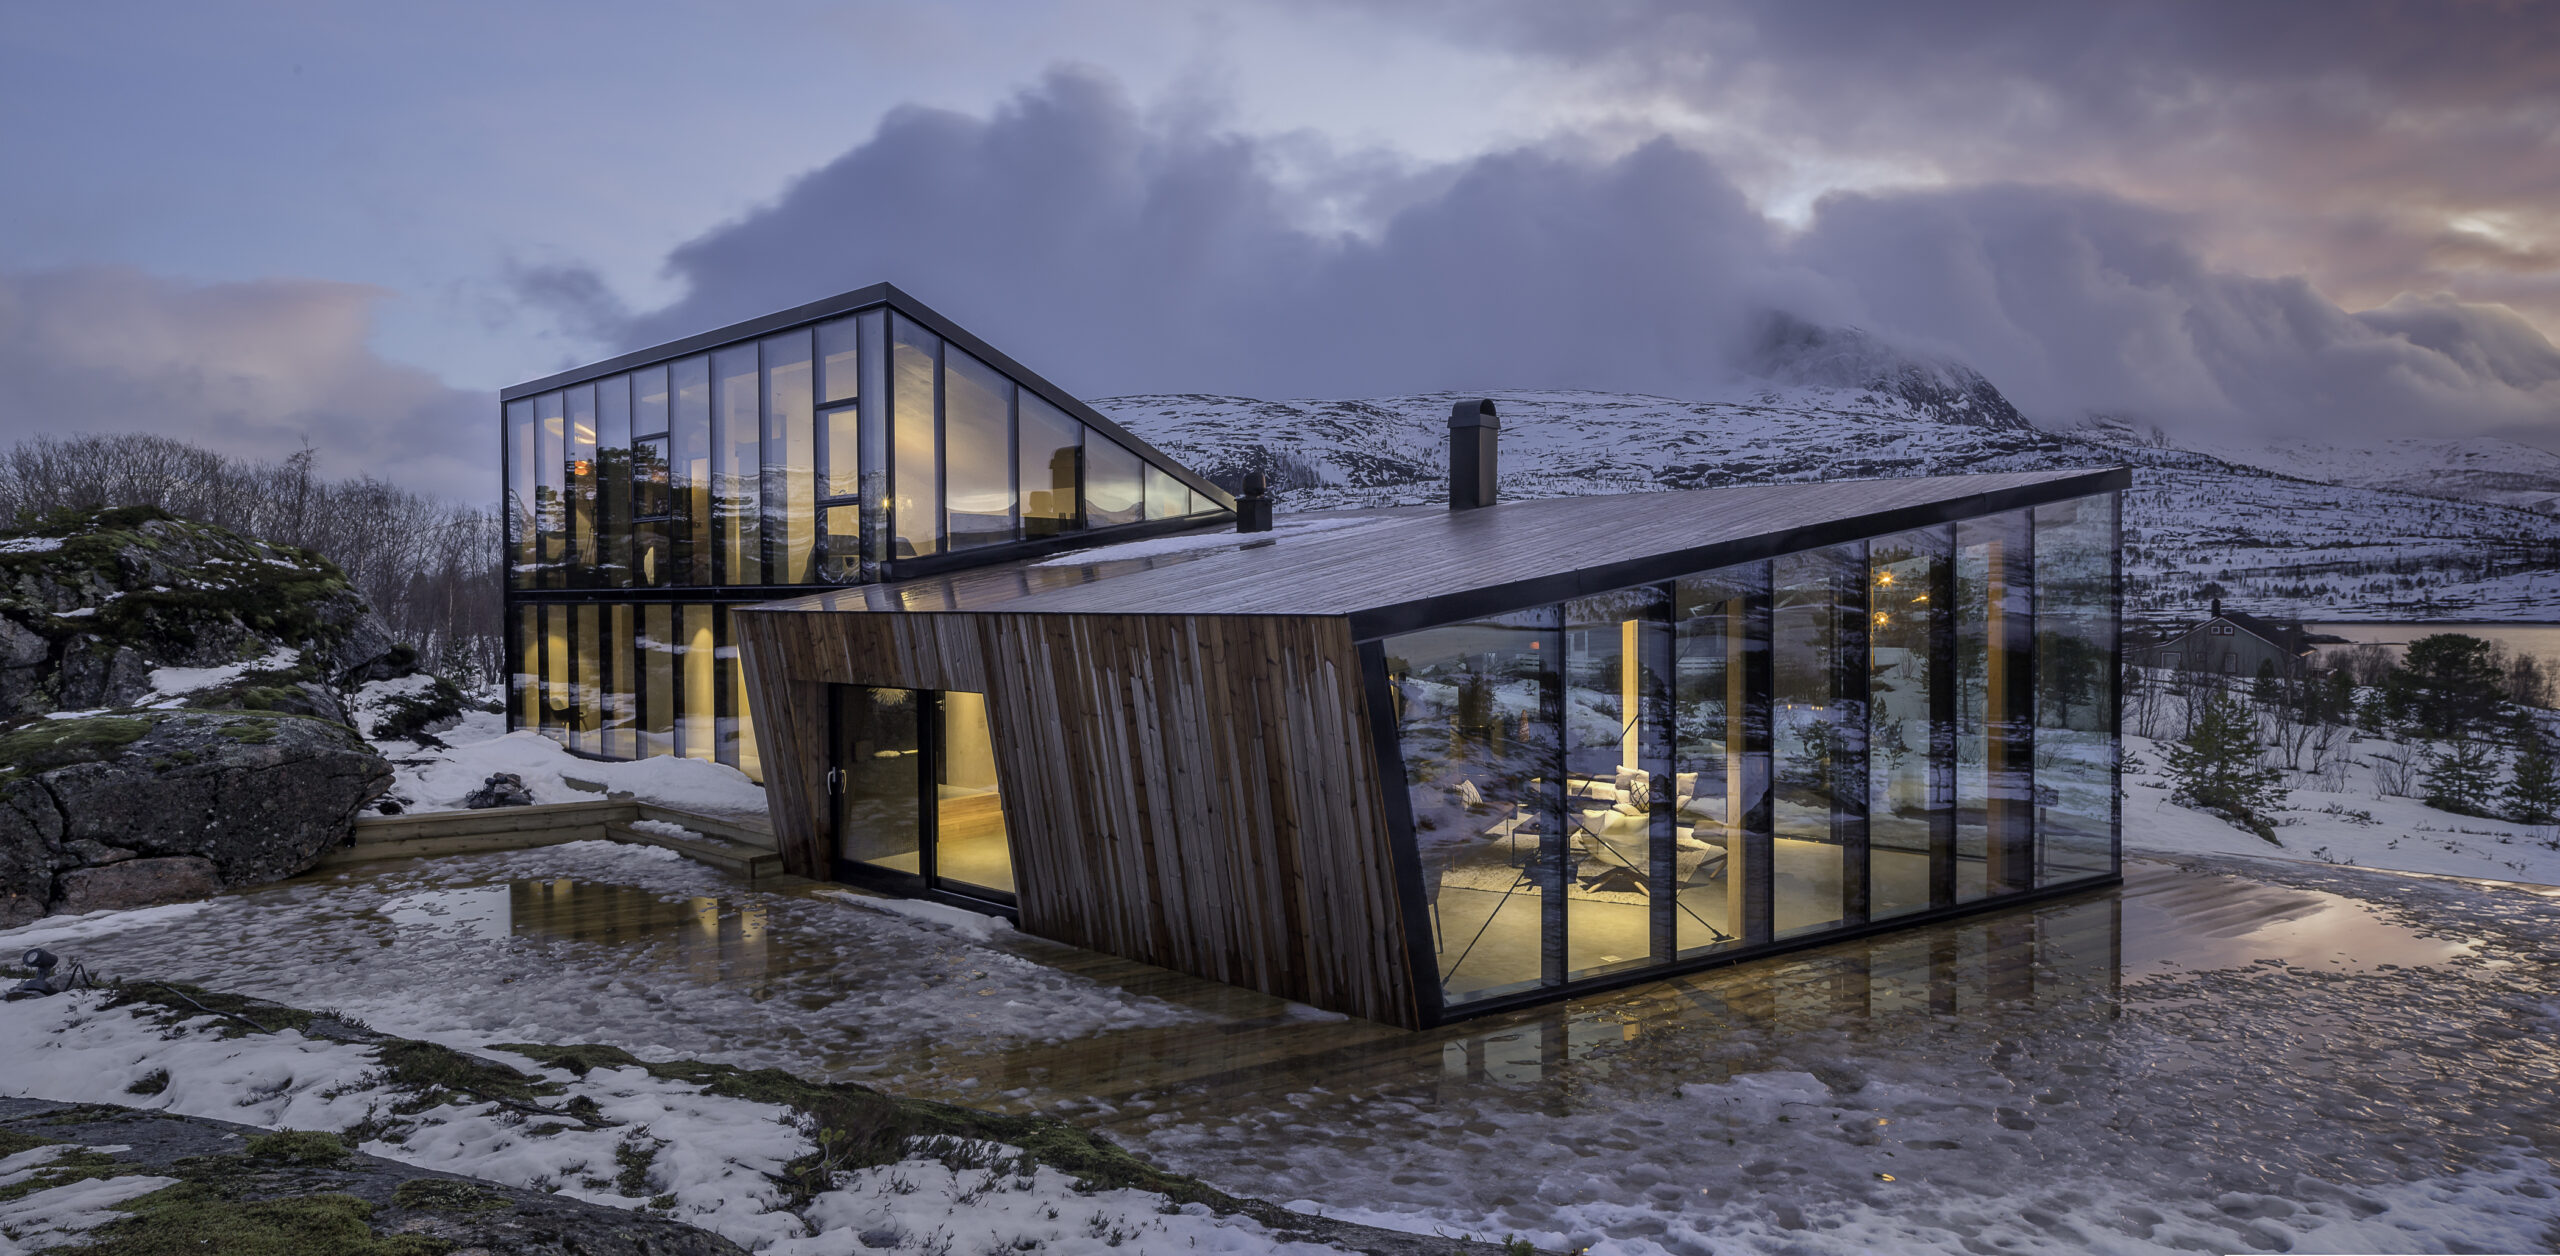 Efjord Cabin by Snorre Stinessen Architecture